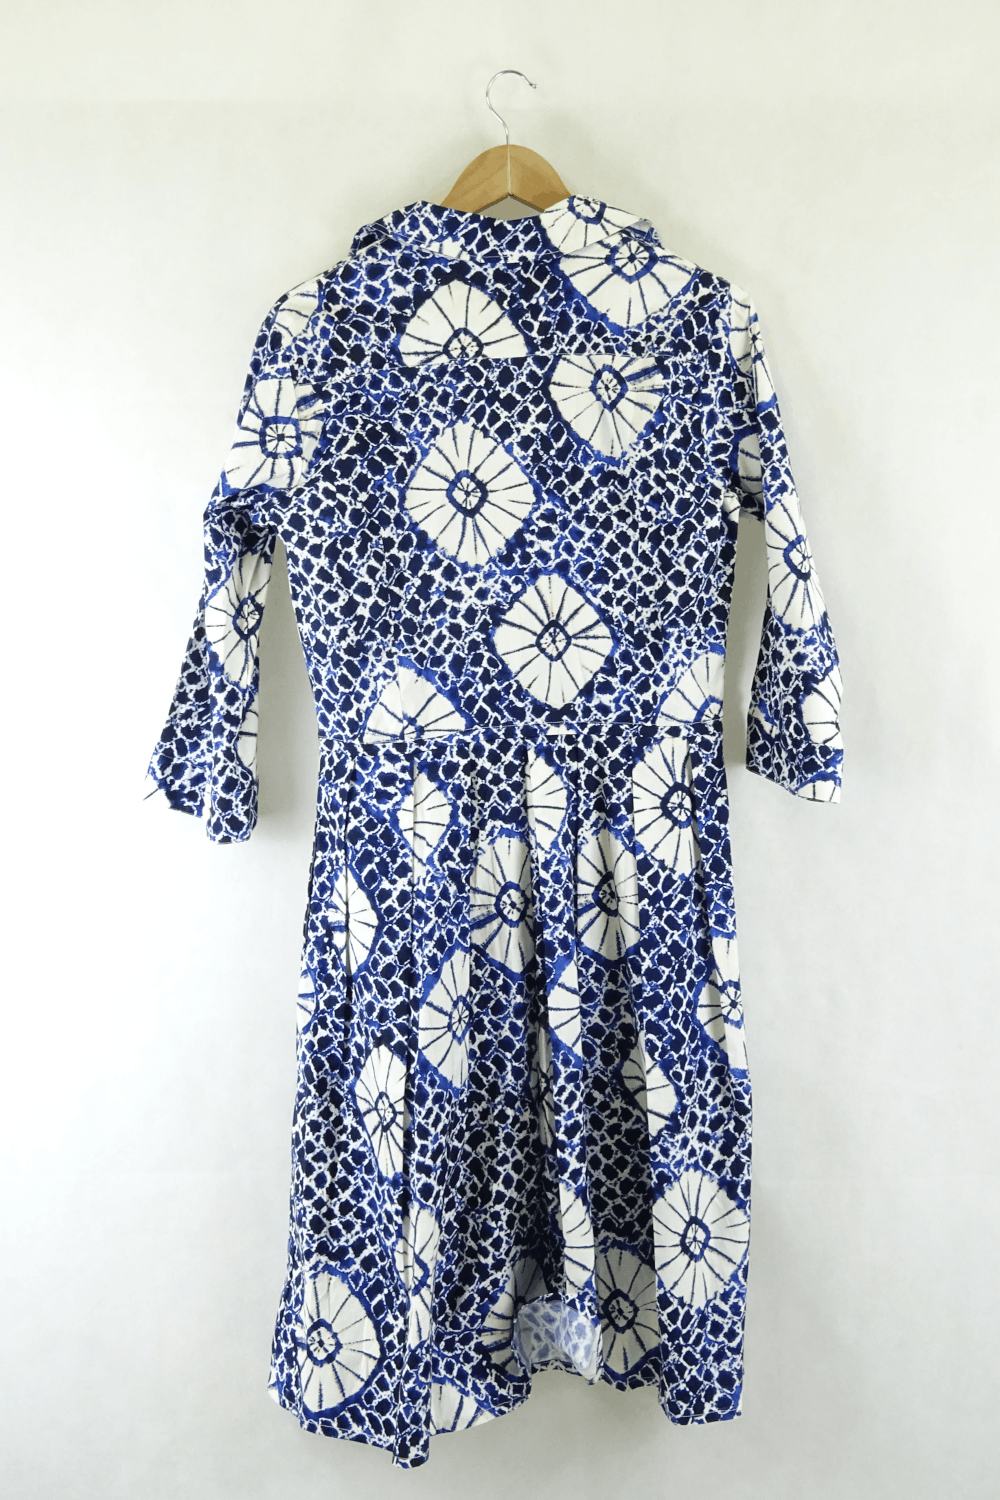 Samantha Sung White And Blue Patterned Dress 10